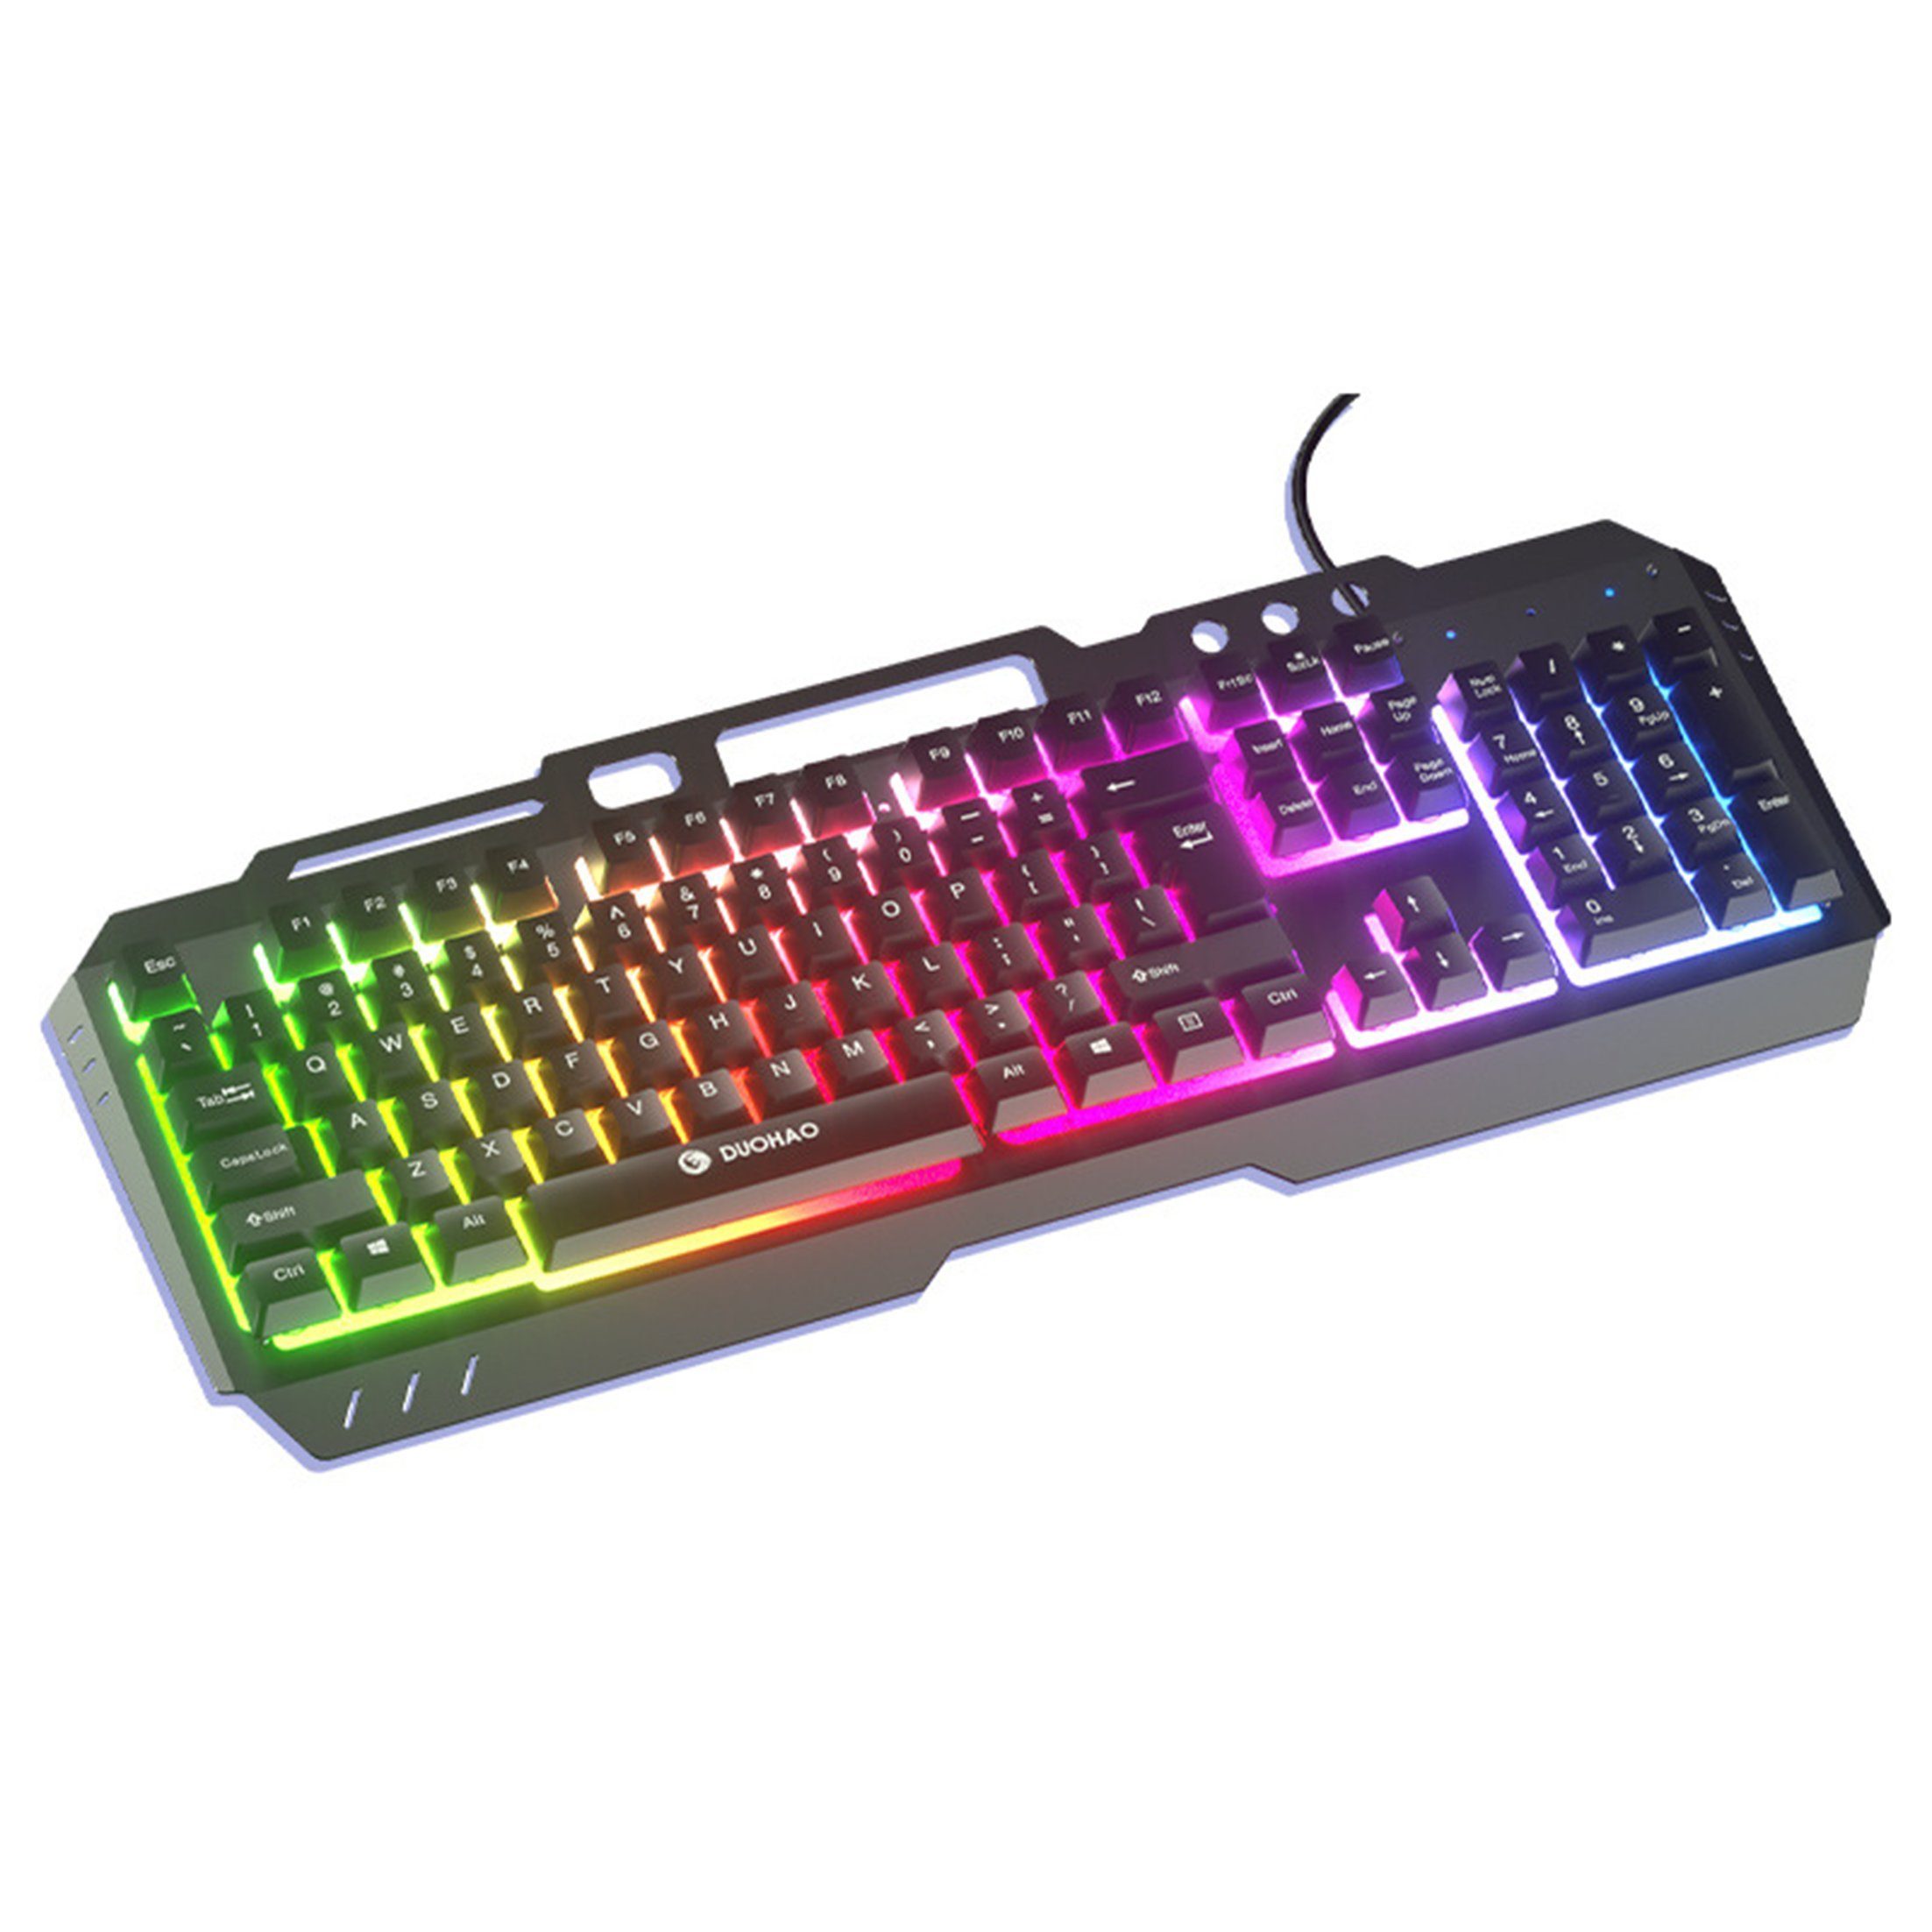 KINSI USB-Gaming-Tastatur,mechanische Tastatur,RGB-Hintergrundbeleuchtung Gaming-Tastatur